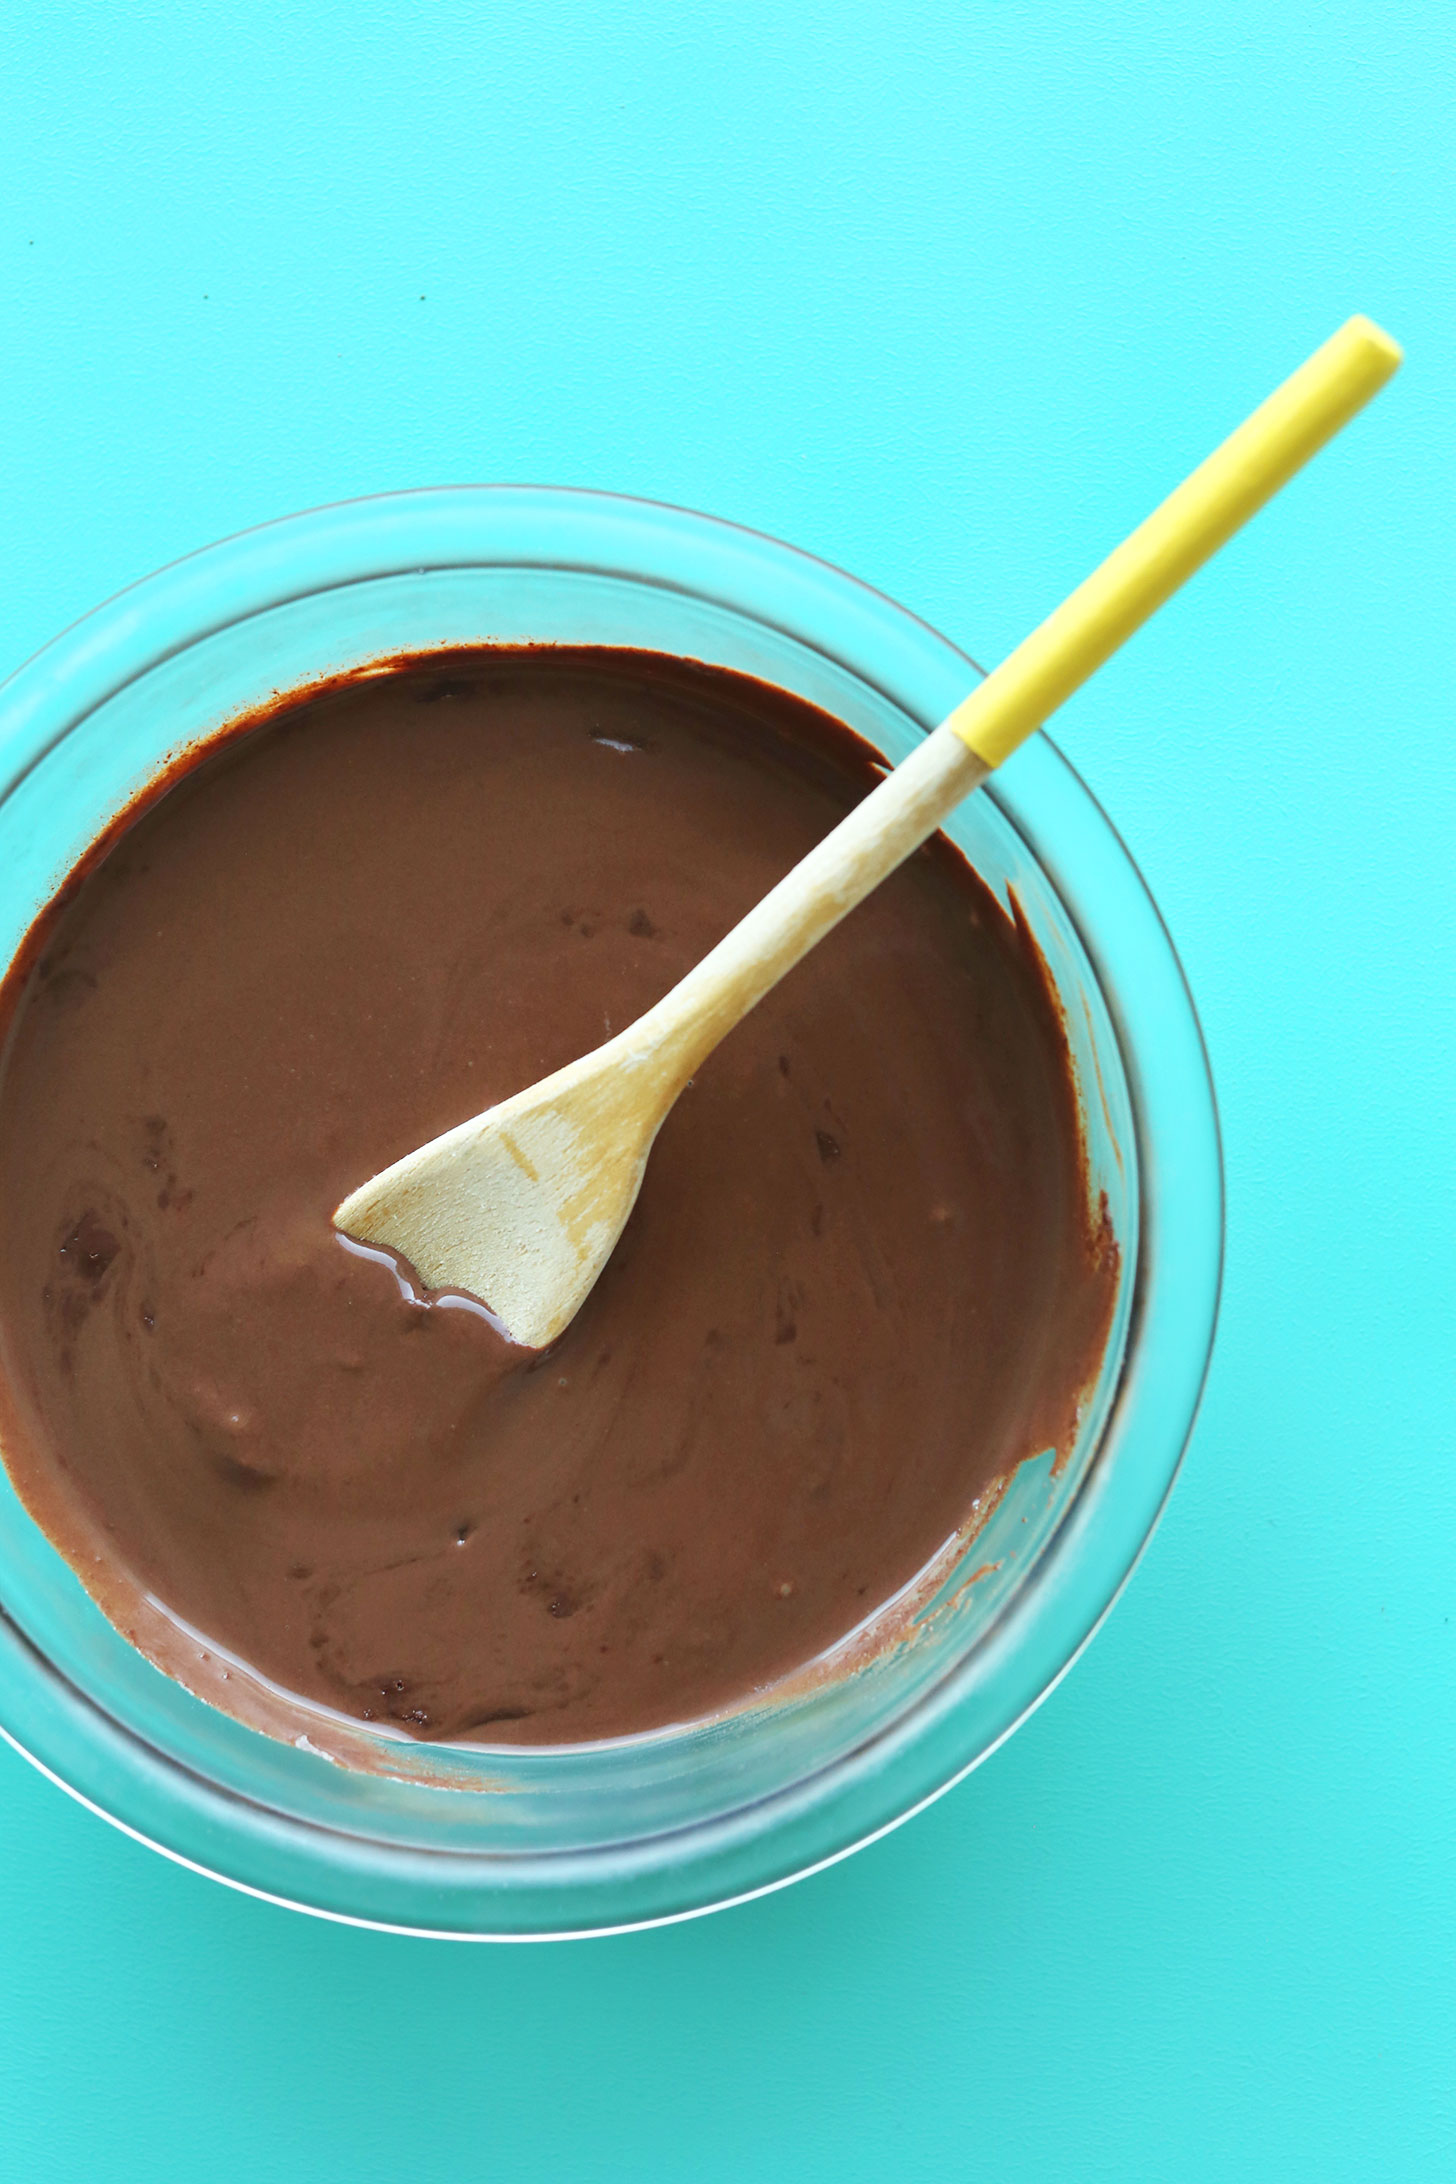 Stirring together rich chocolatey creamy mixture for our vegan chocolate ice cream recipe